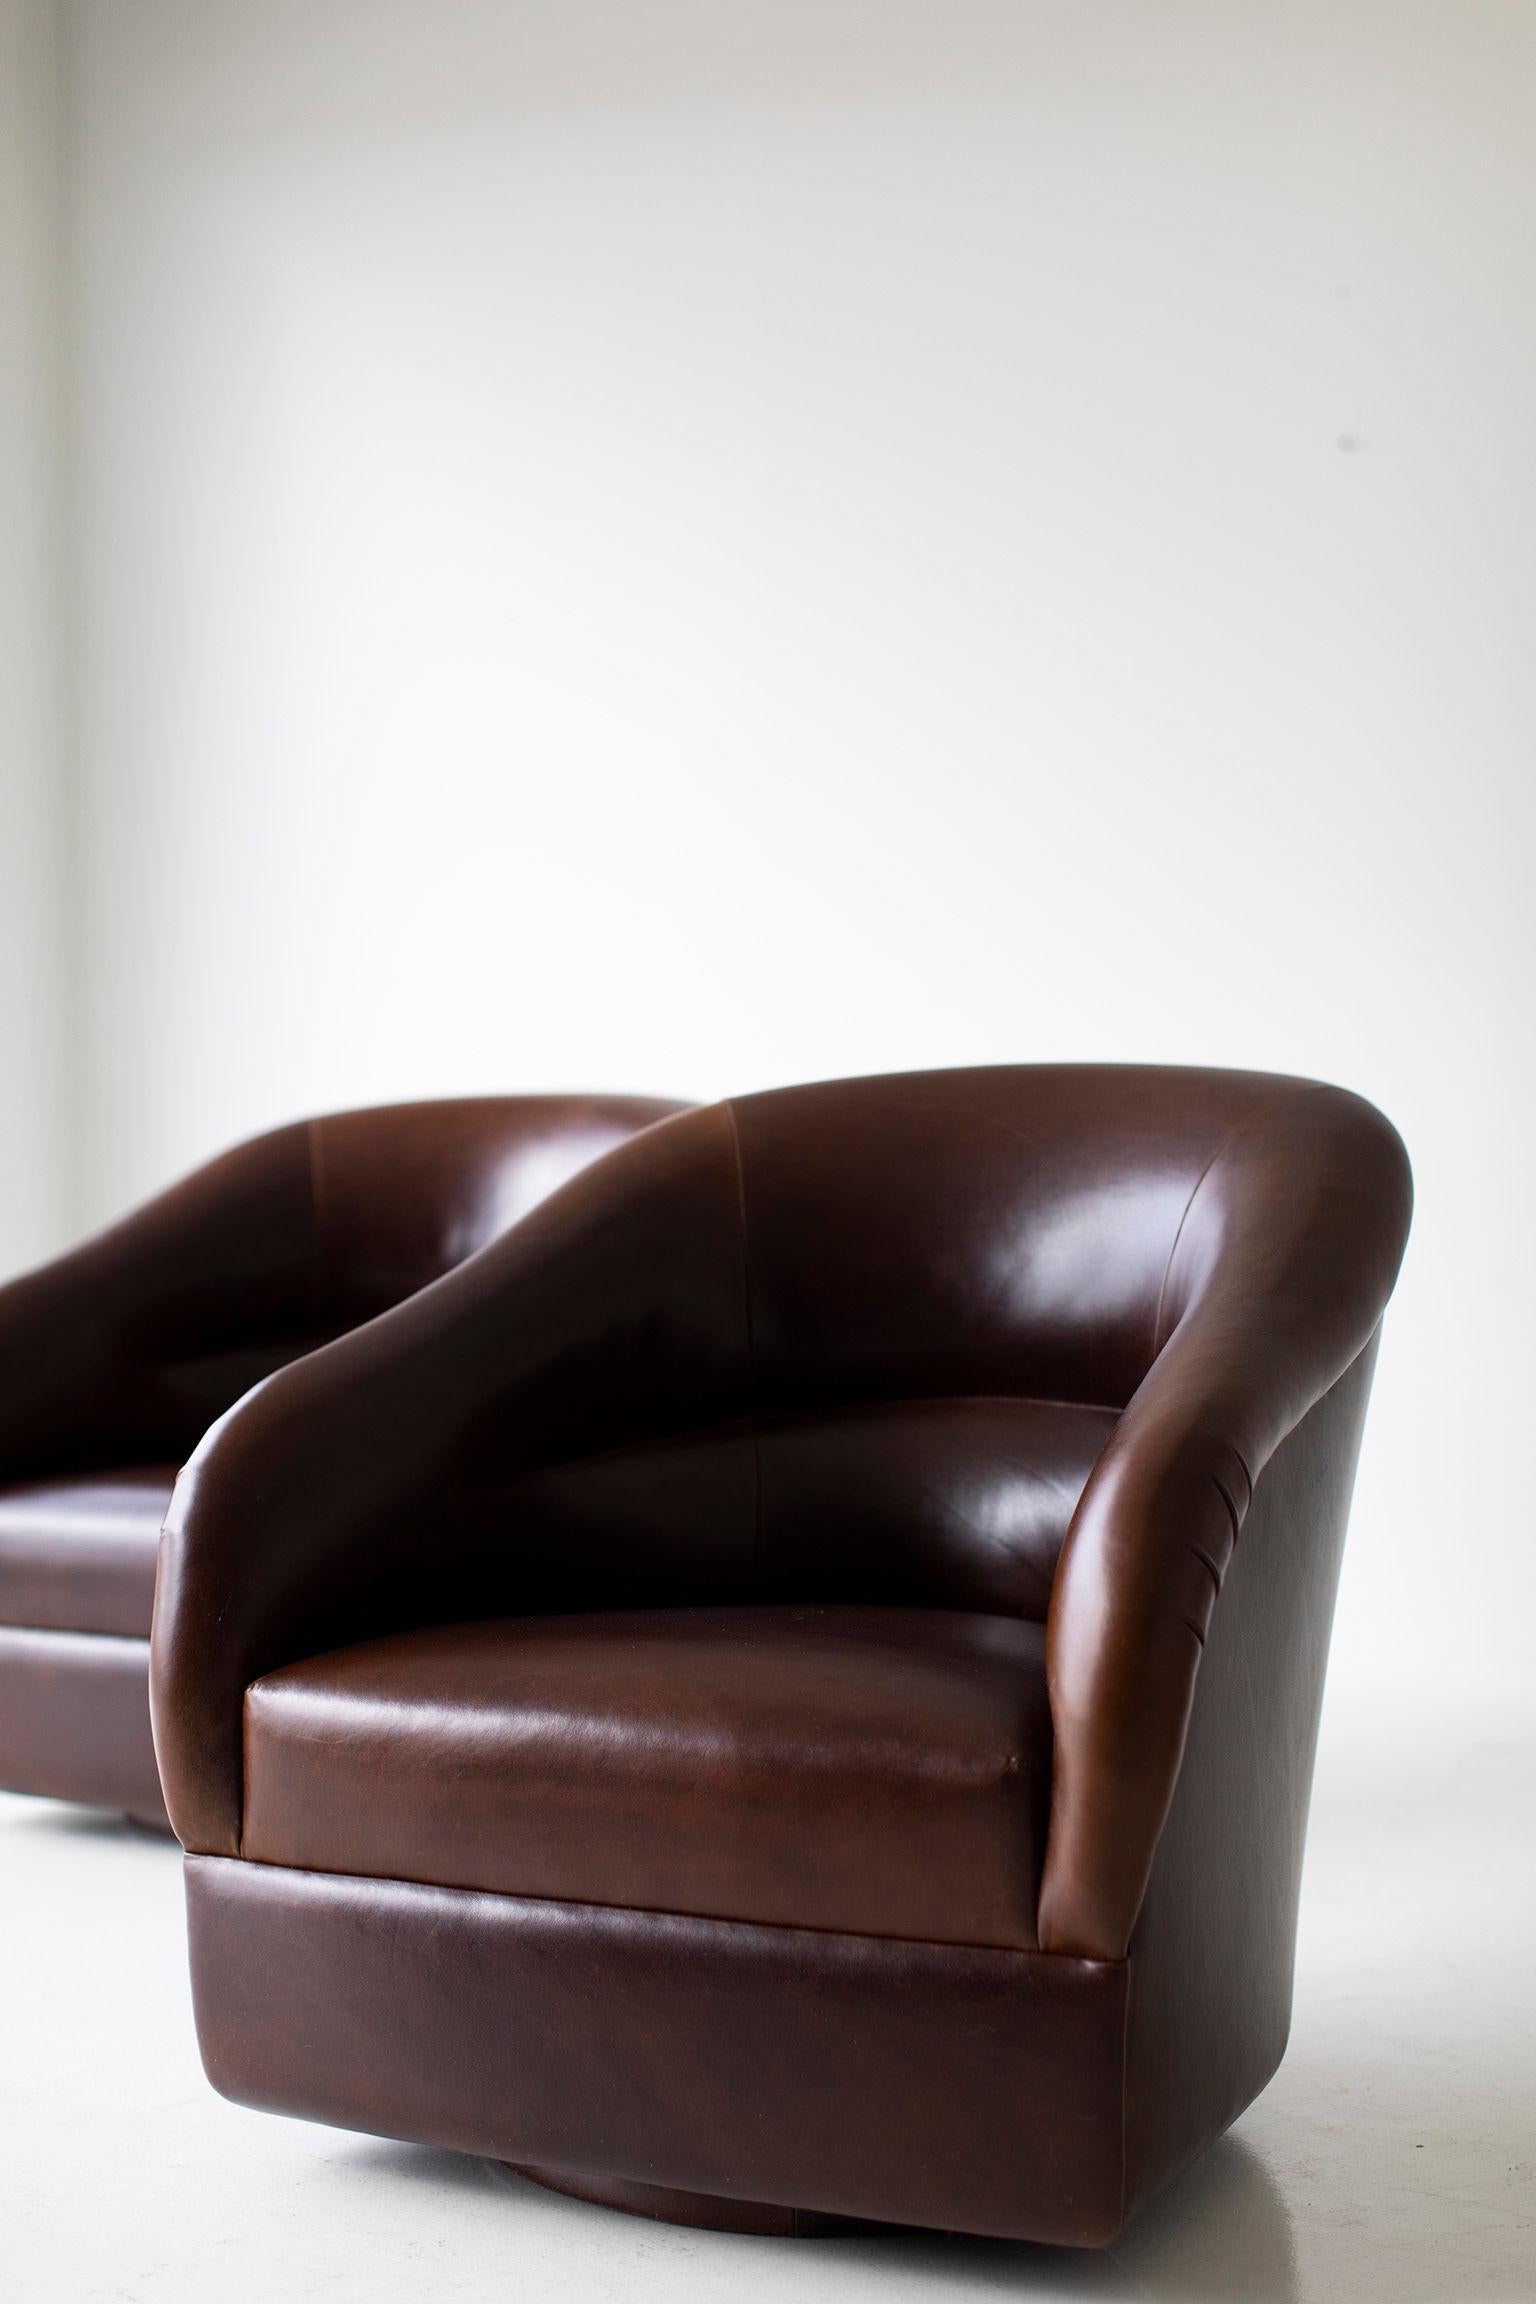 Leather Ward Bennett Swivel Lounge Chairs for Brickel Associates Inc